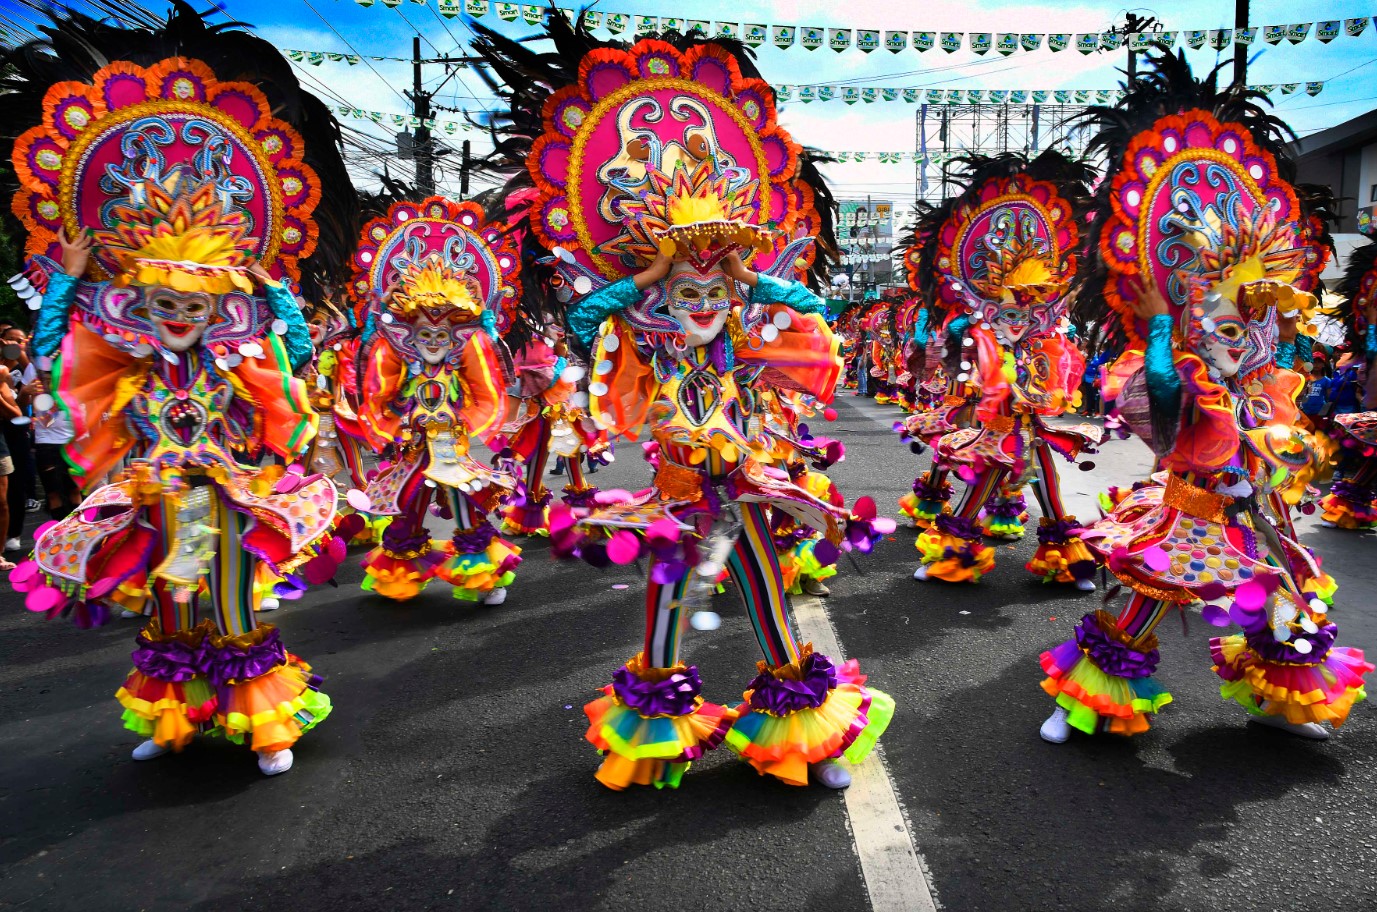 Masskara Festival Philippines